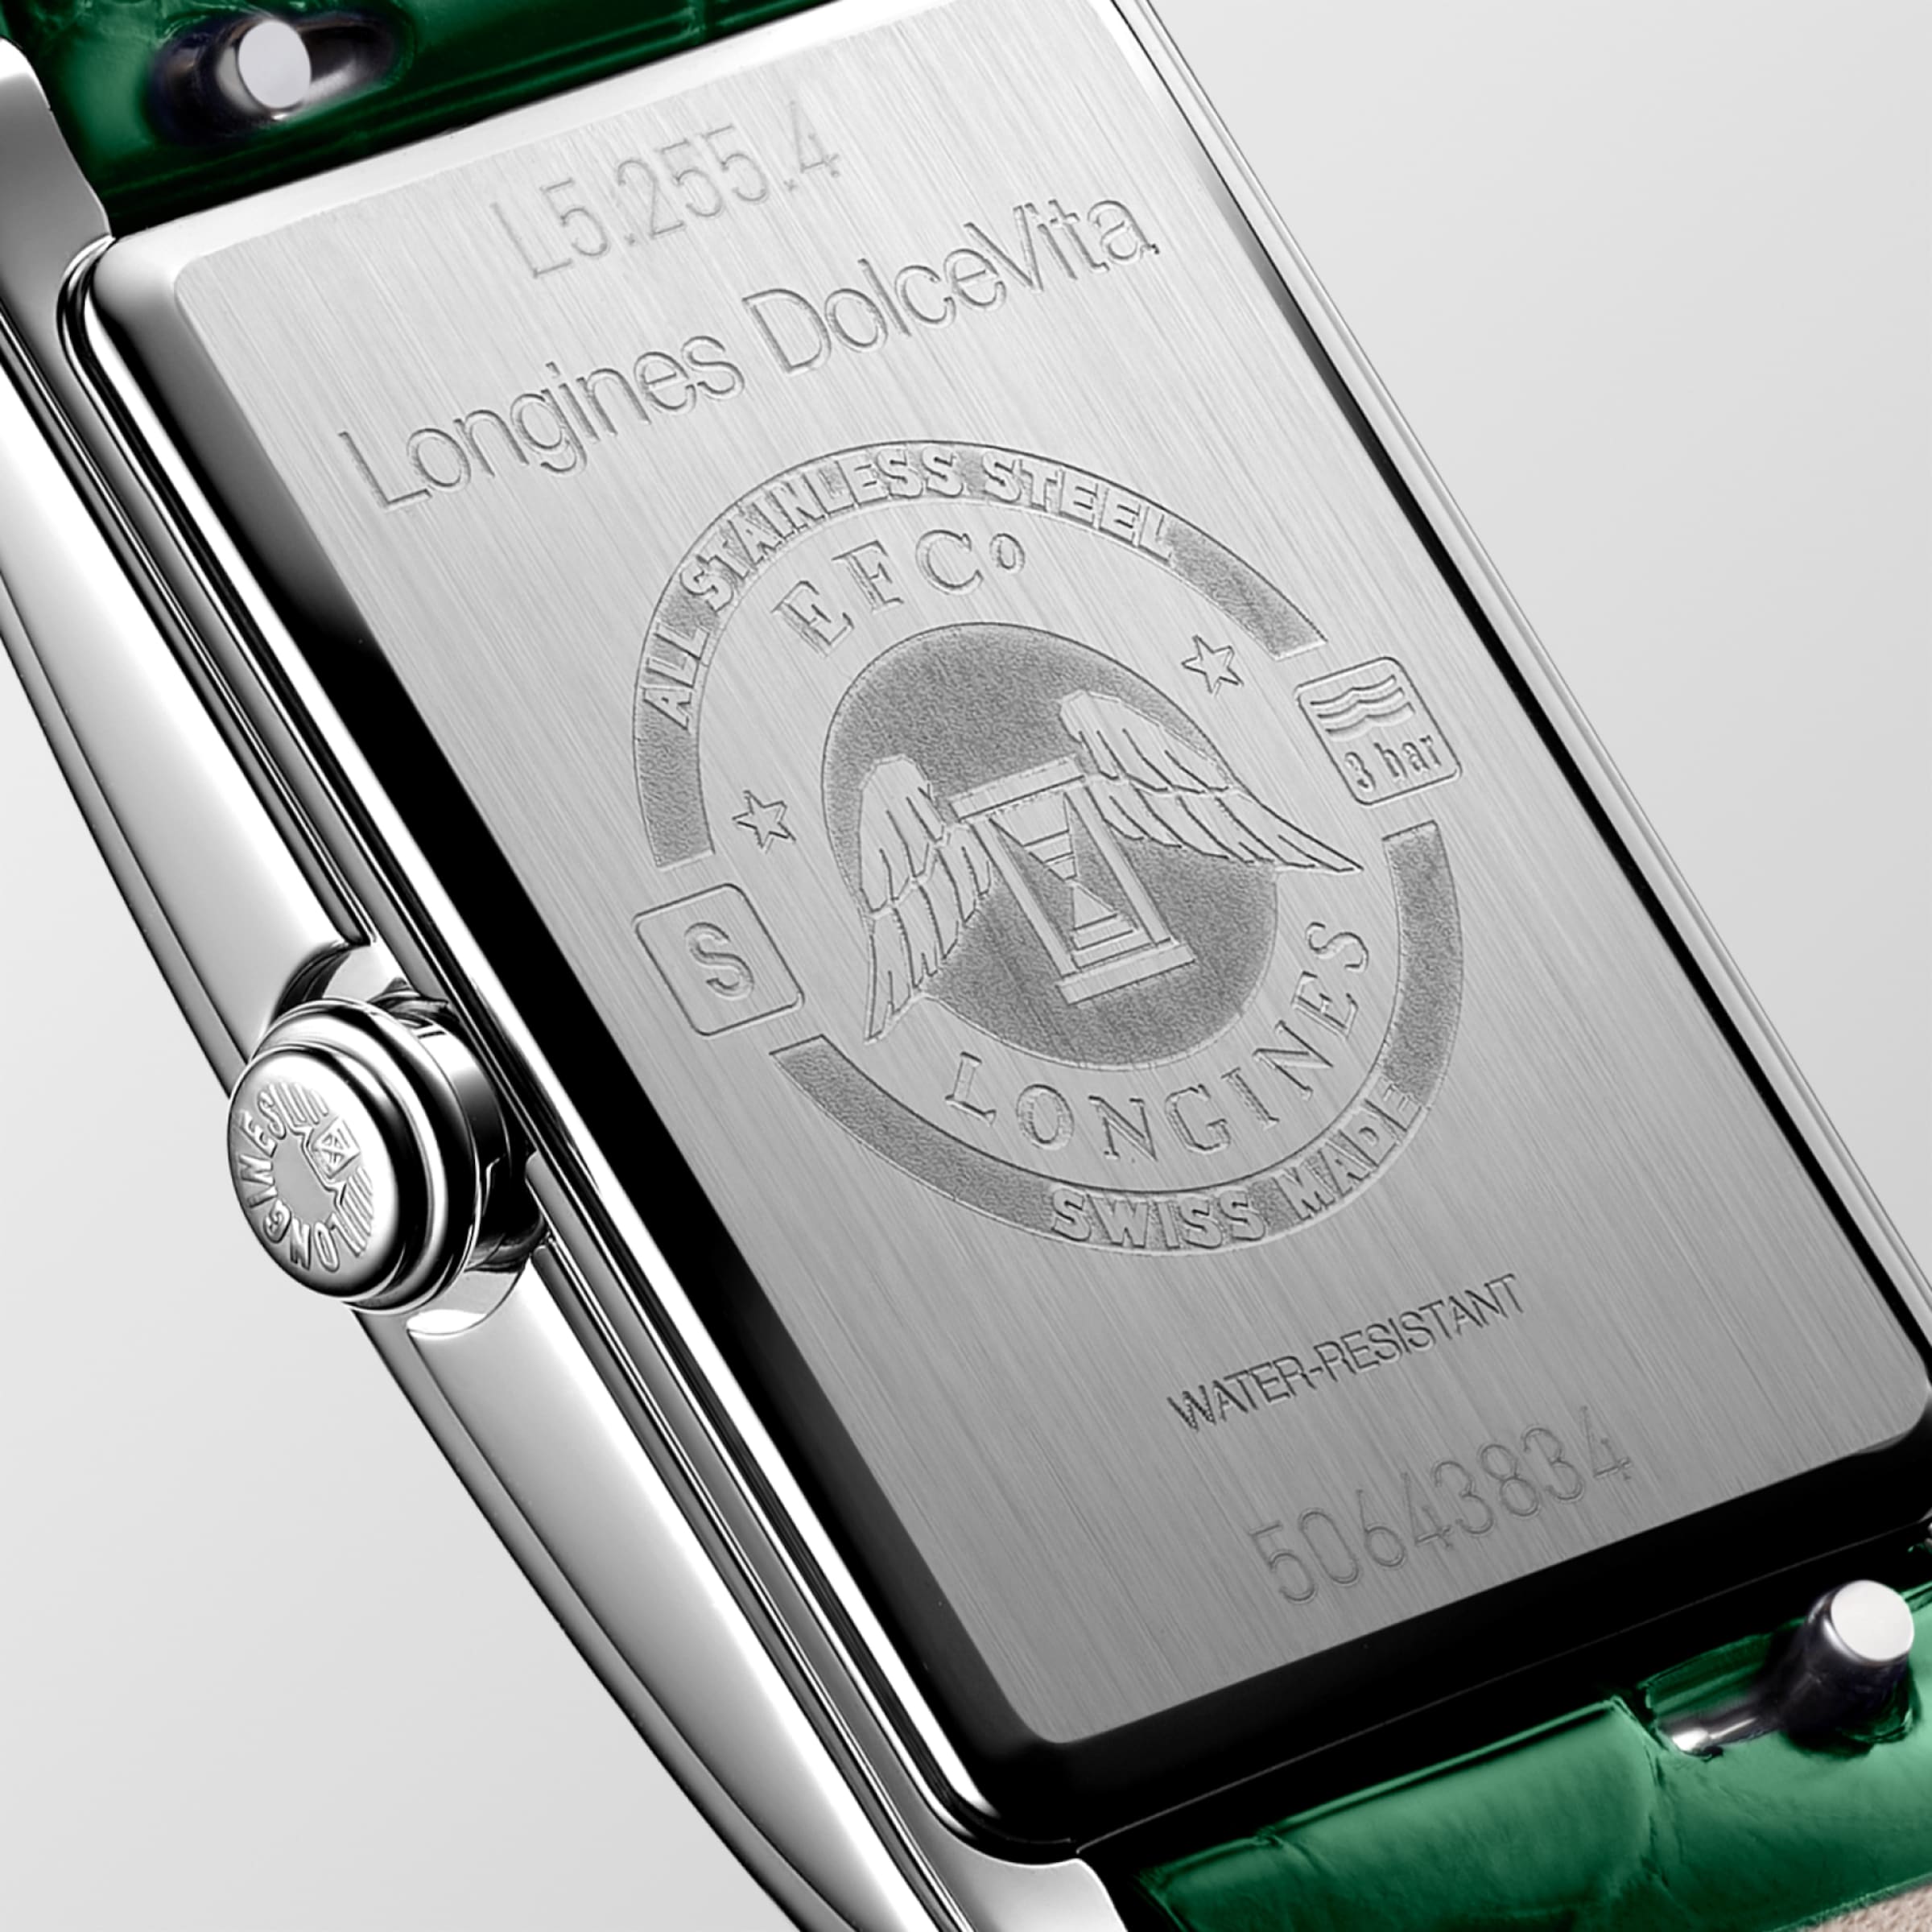 Longines DOLCEVITA Quartz Stainless steel Watch - L5.255.4.71.A